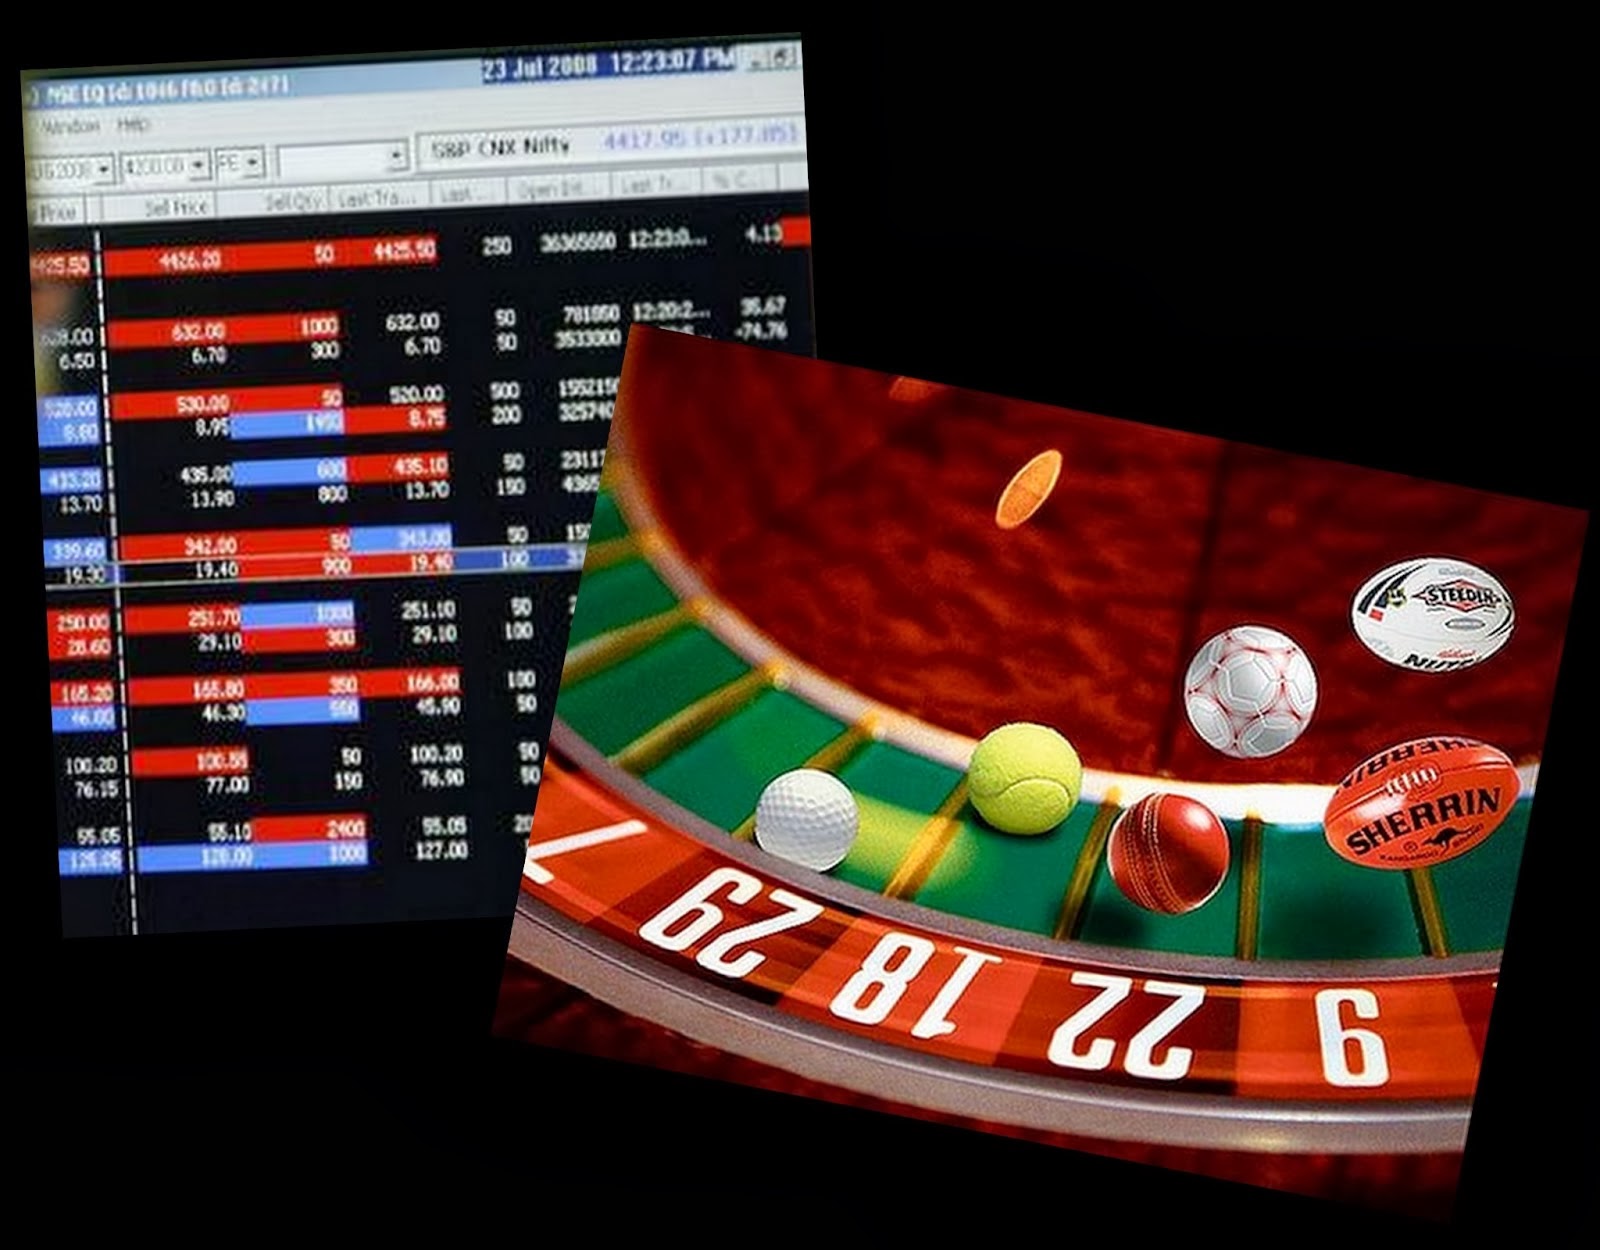 Is forex gambling